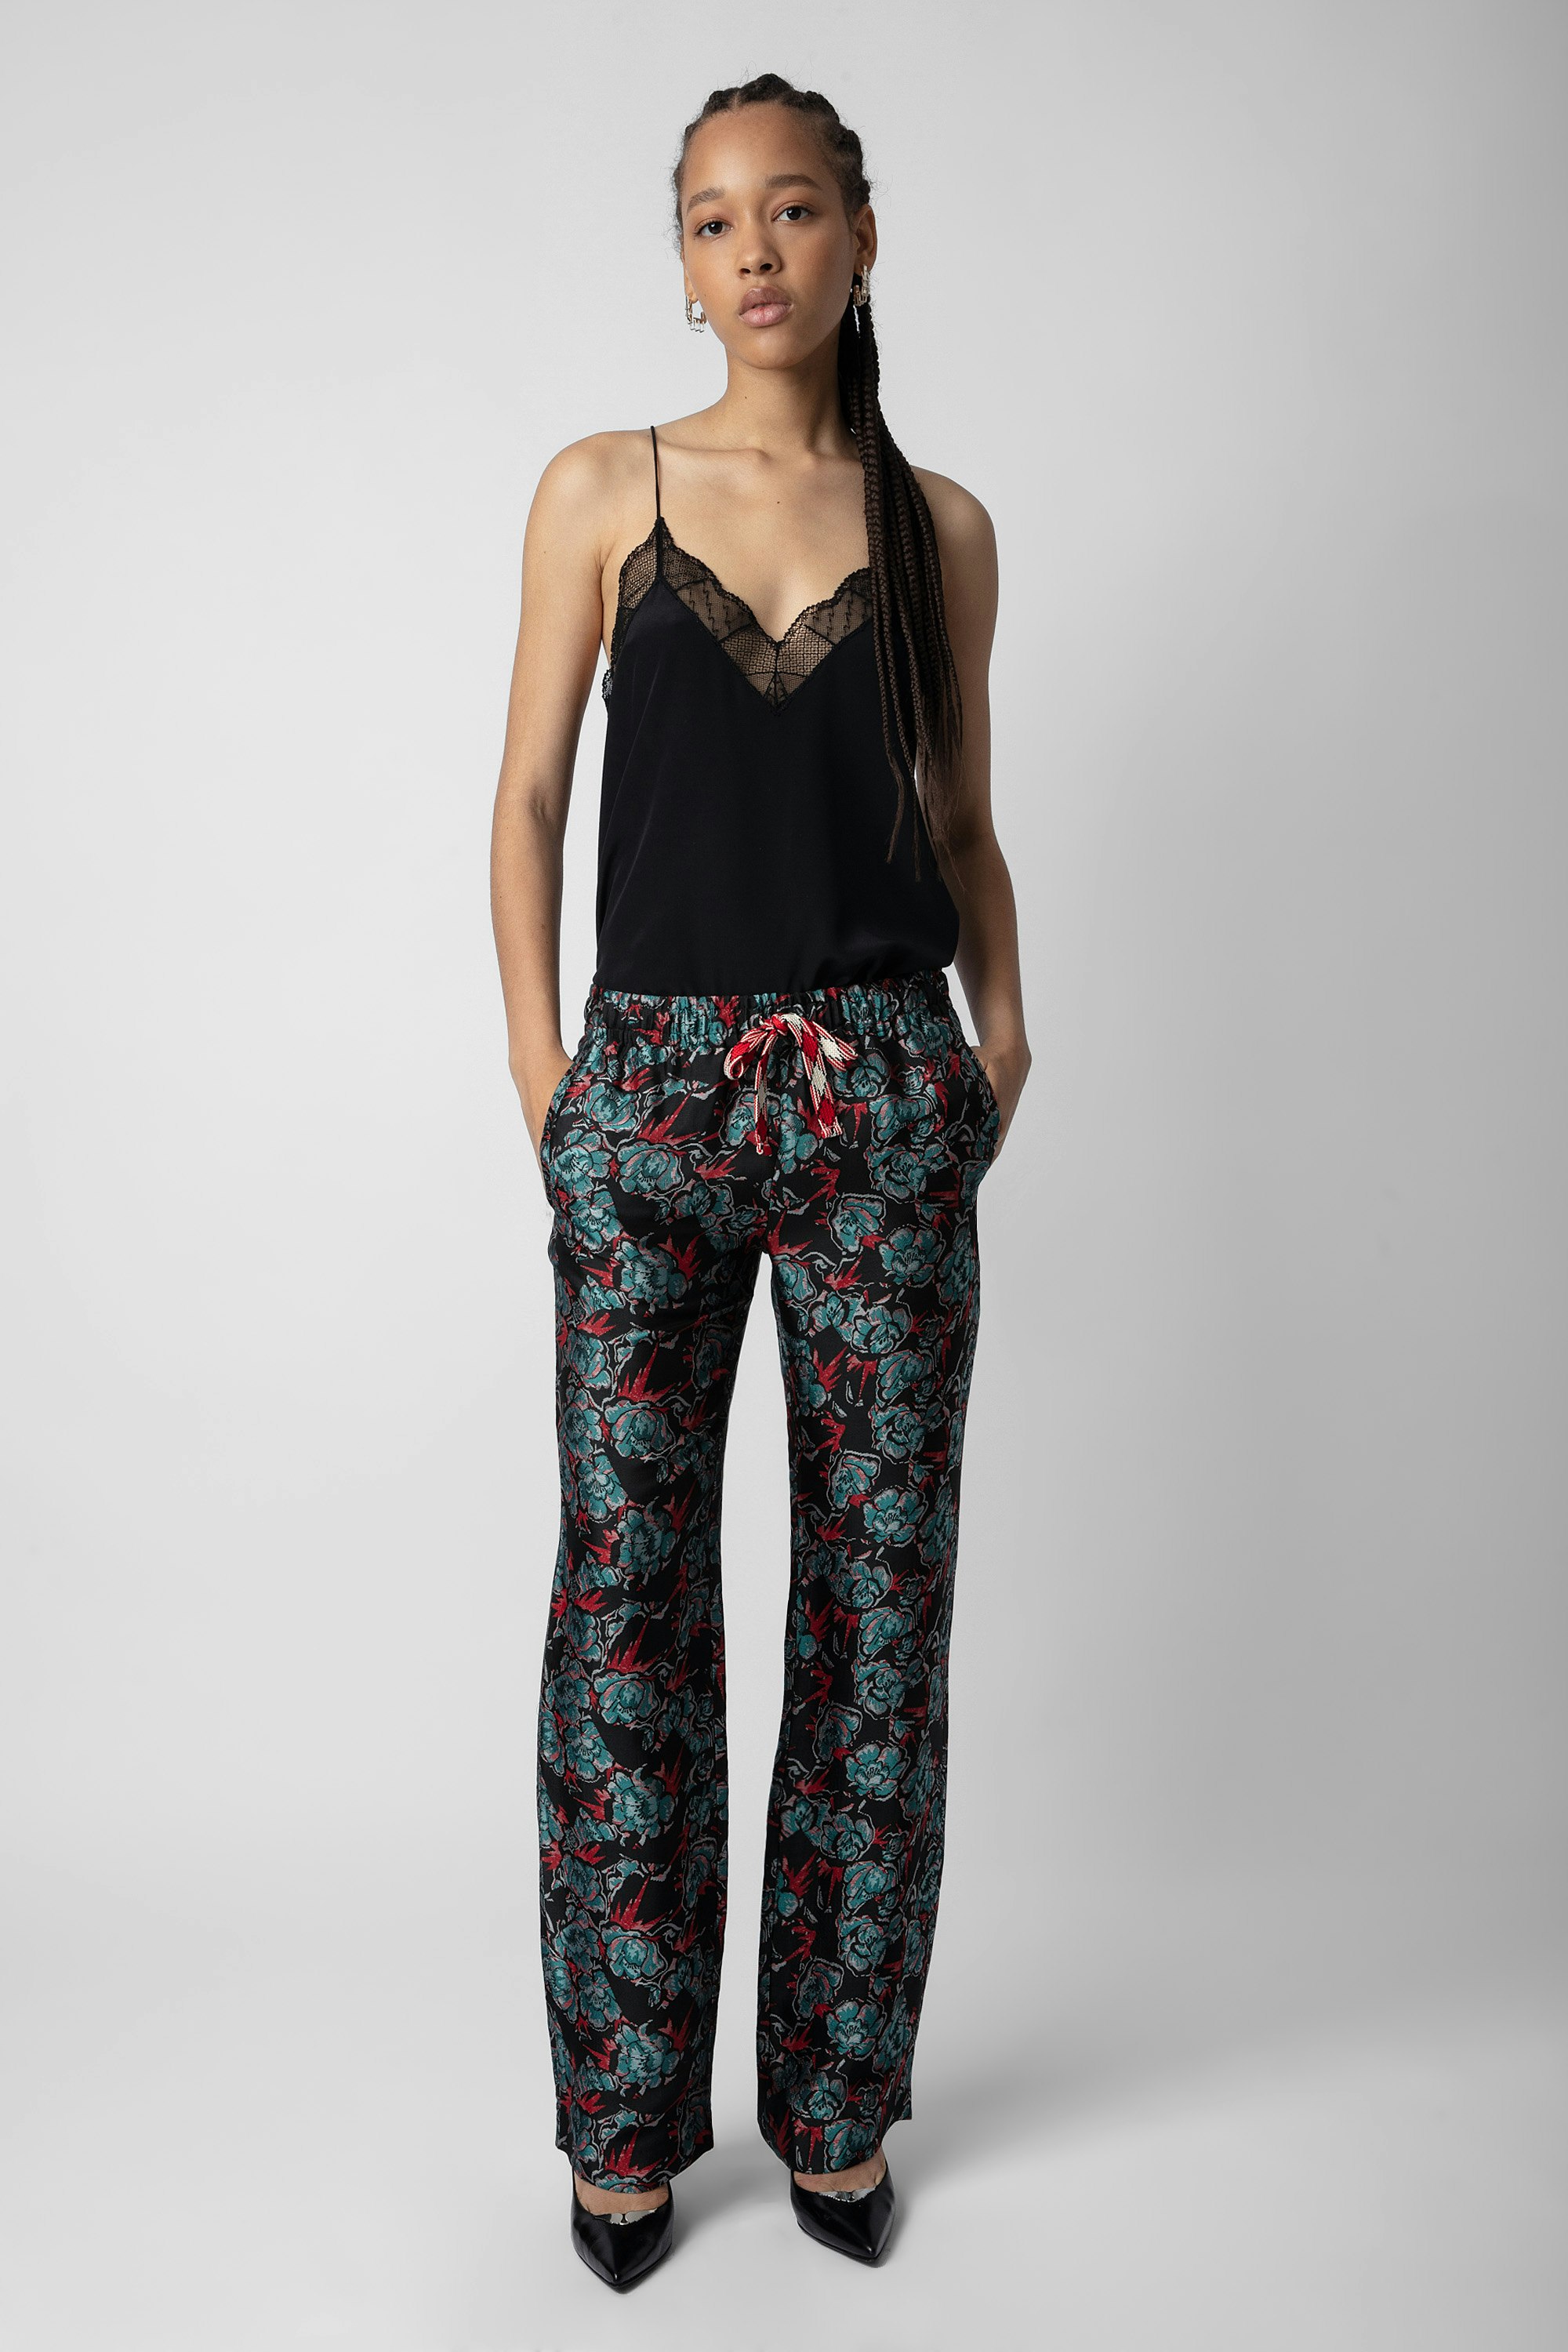 Pomy Jacquard Pants - Women’s black floral jacquard pants with patterned drawstring.